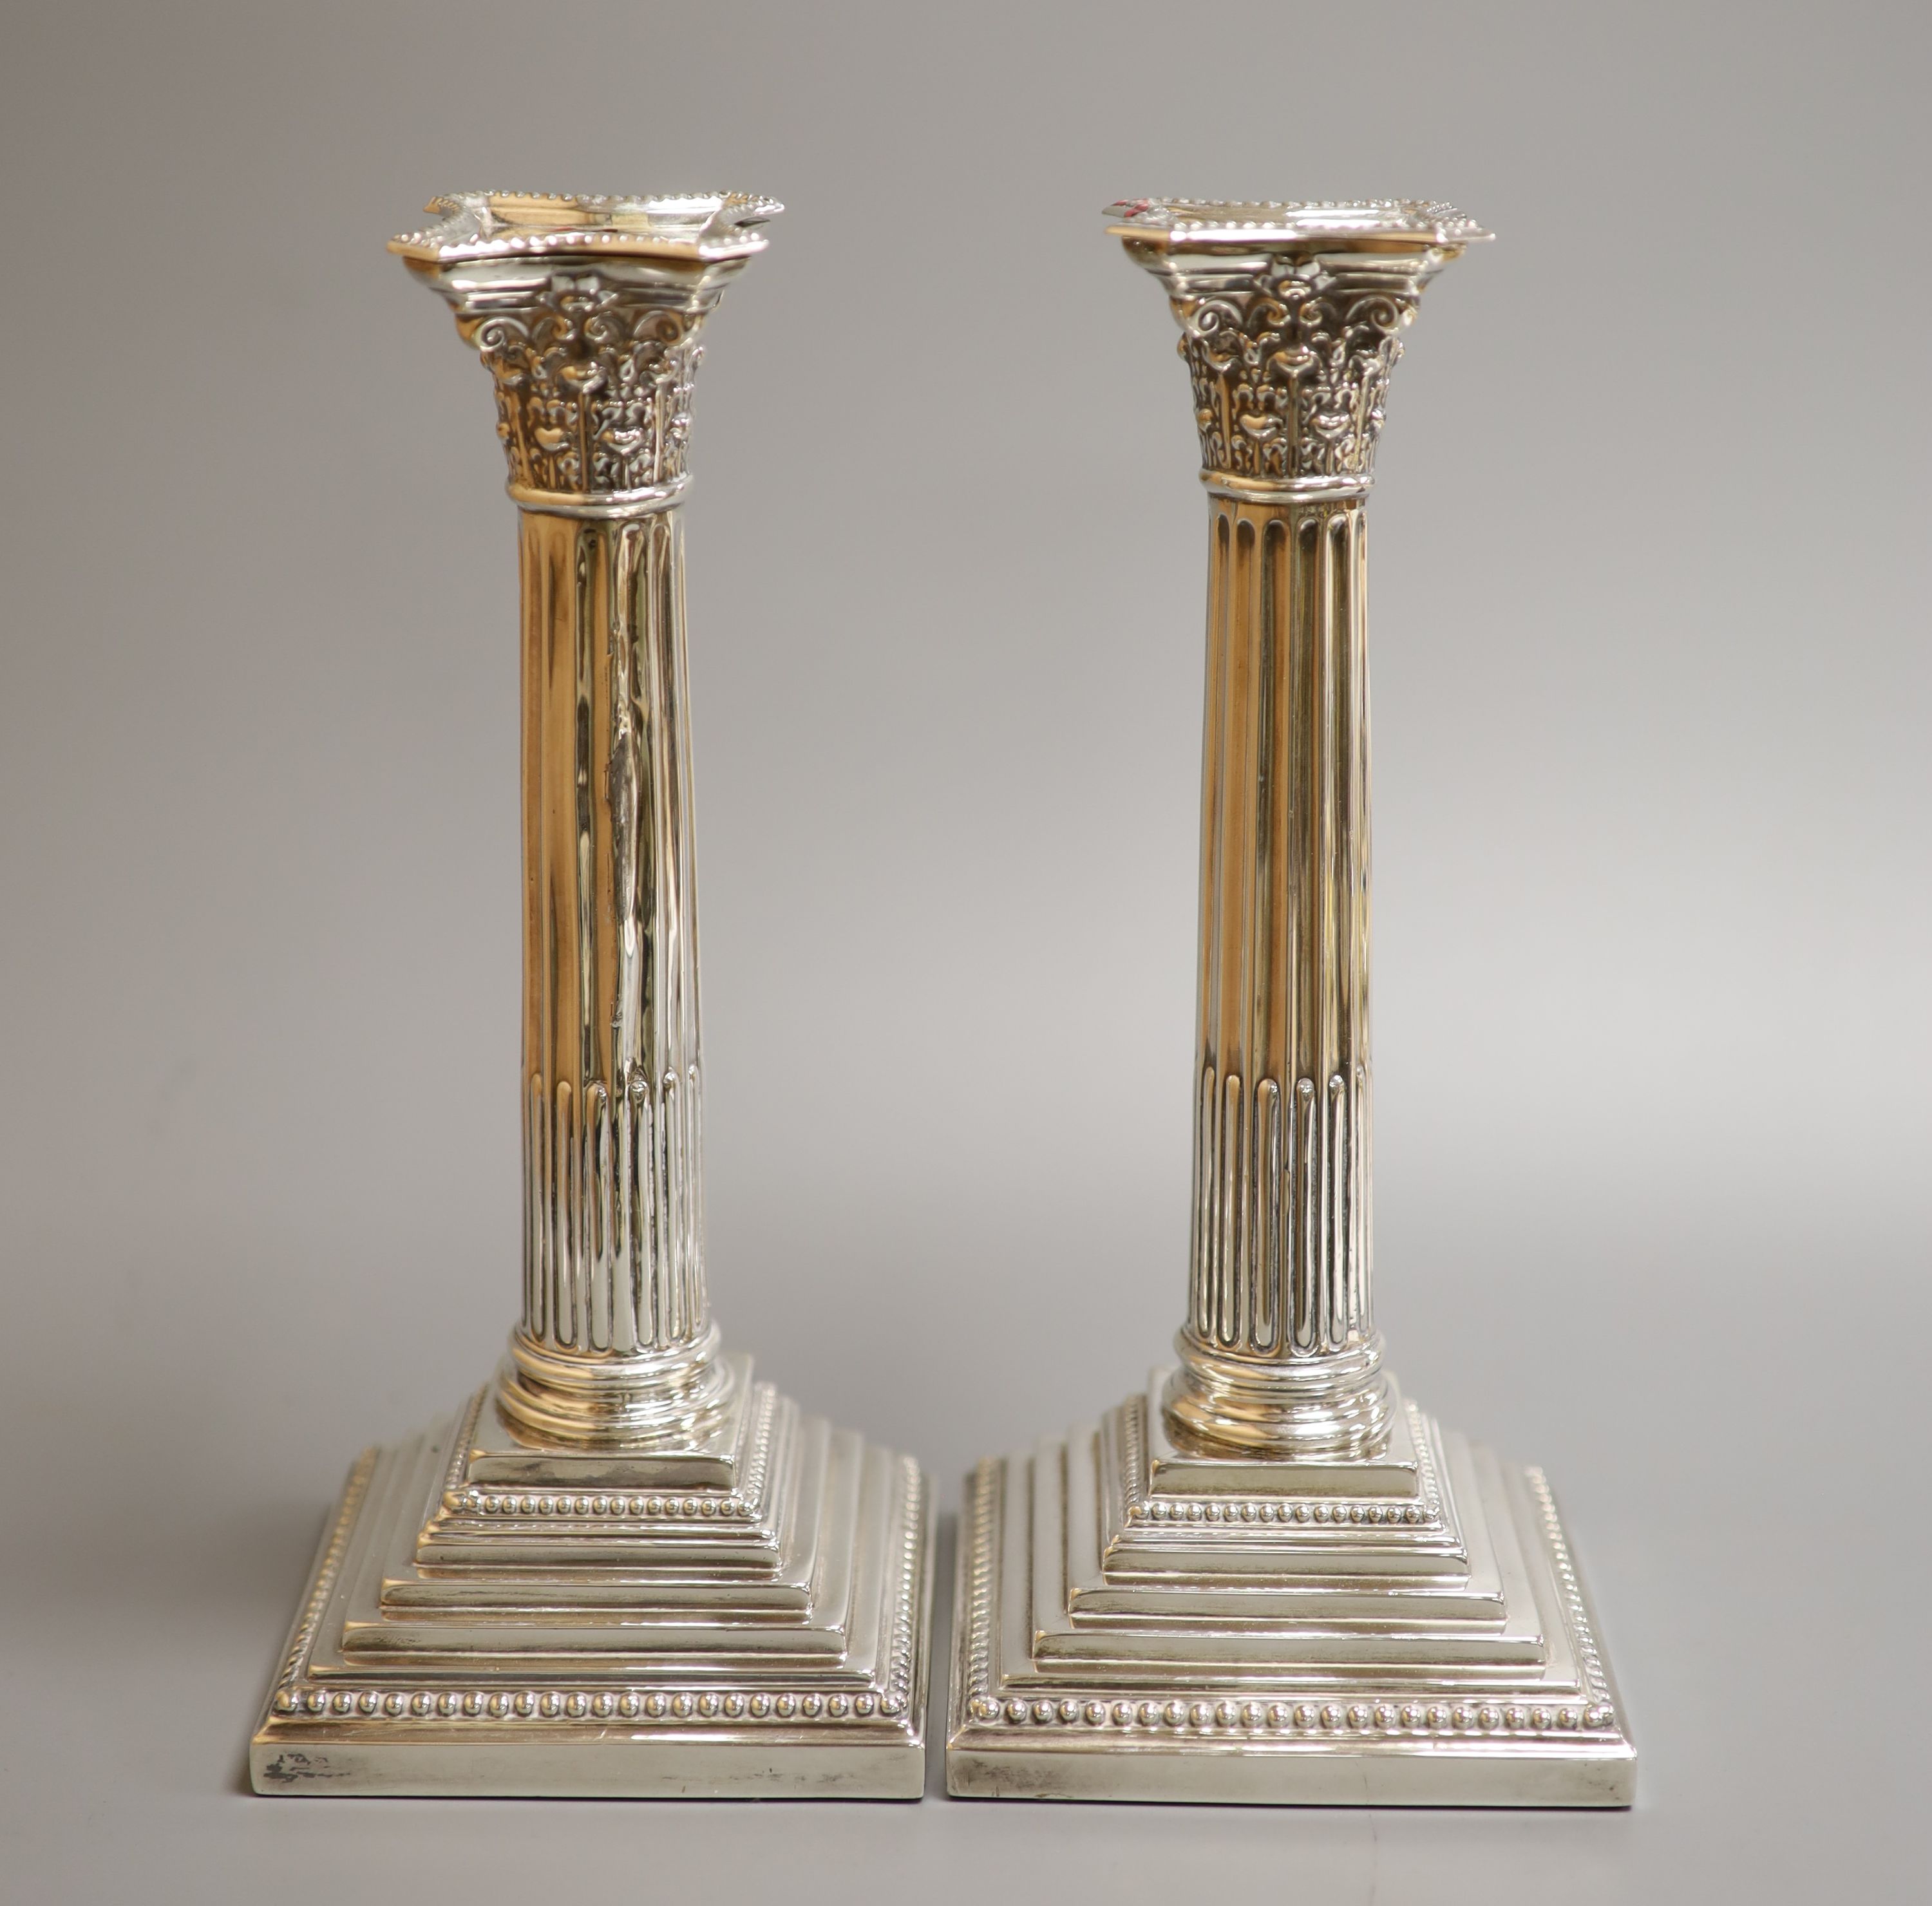 A pair of Edwardian silver Corinthian column candlesticks by Williams (Birmingham) Ltd, Birmingham, 1903, height 24.5cm, weighted, (a.f.)